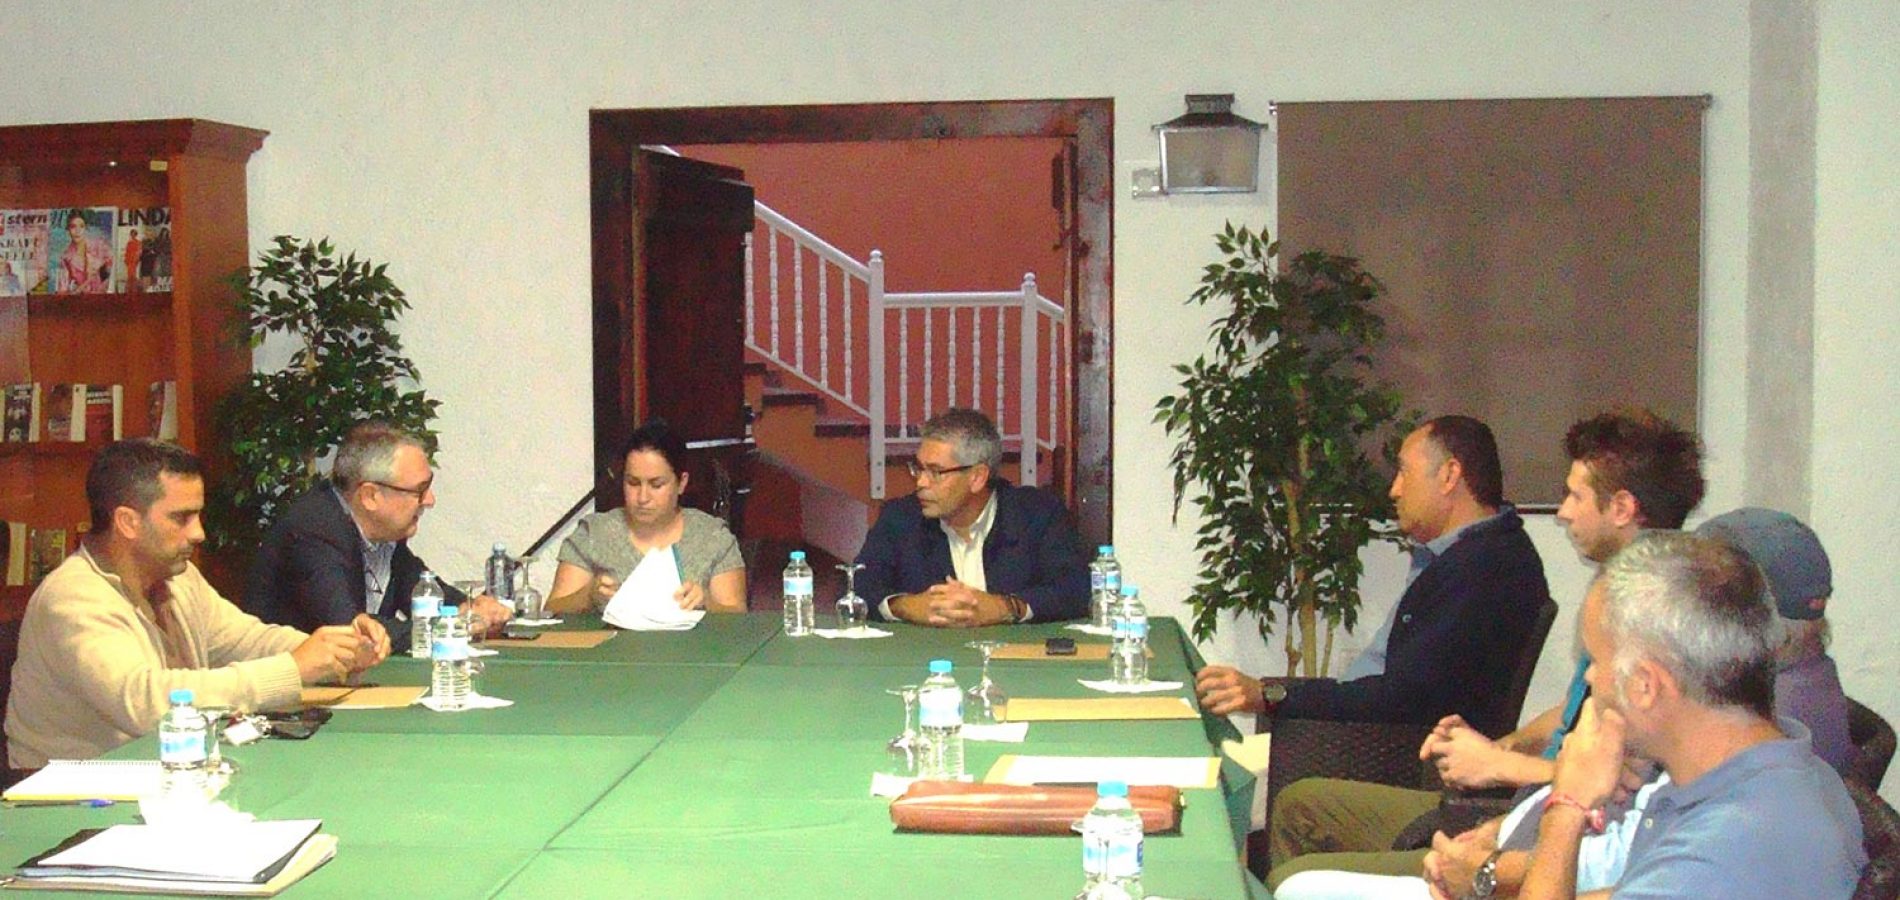 Cabildo and AECA reach a pre-agreement to foster formative programs in Antigua